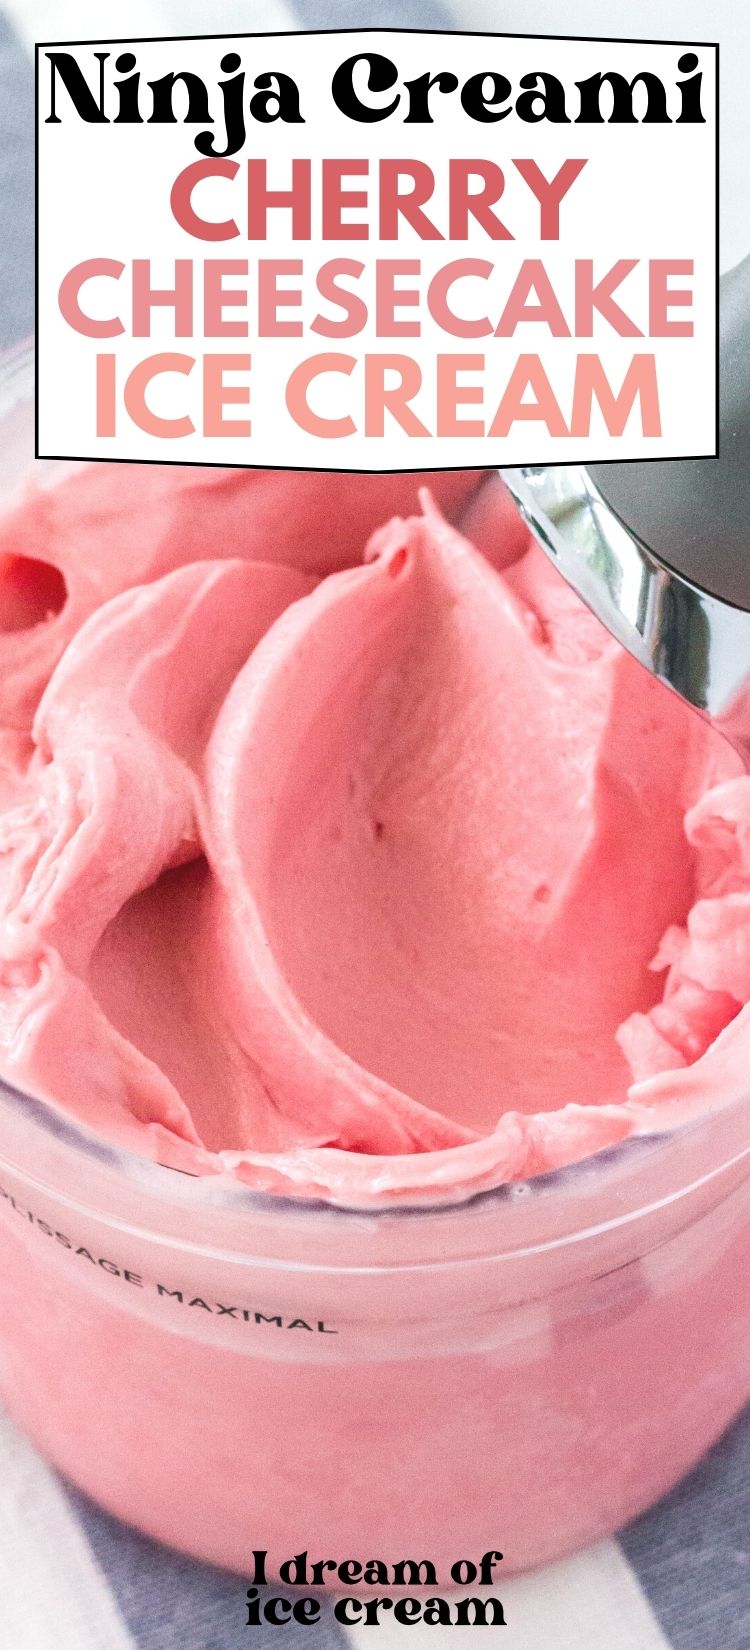 an ice cream scoop swirls the surface of cherry cheesecake ice cream in a Ninja Creami pint container. An overlay reads, "Ninja Creami cherry cheesecake ice cream"